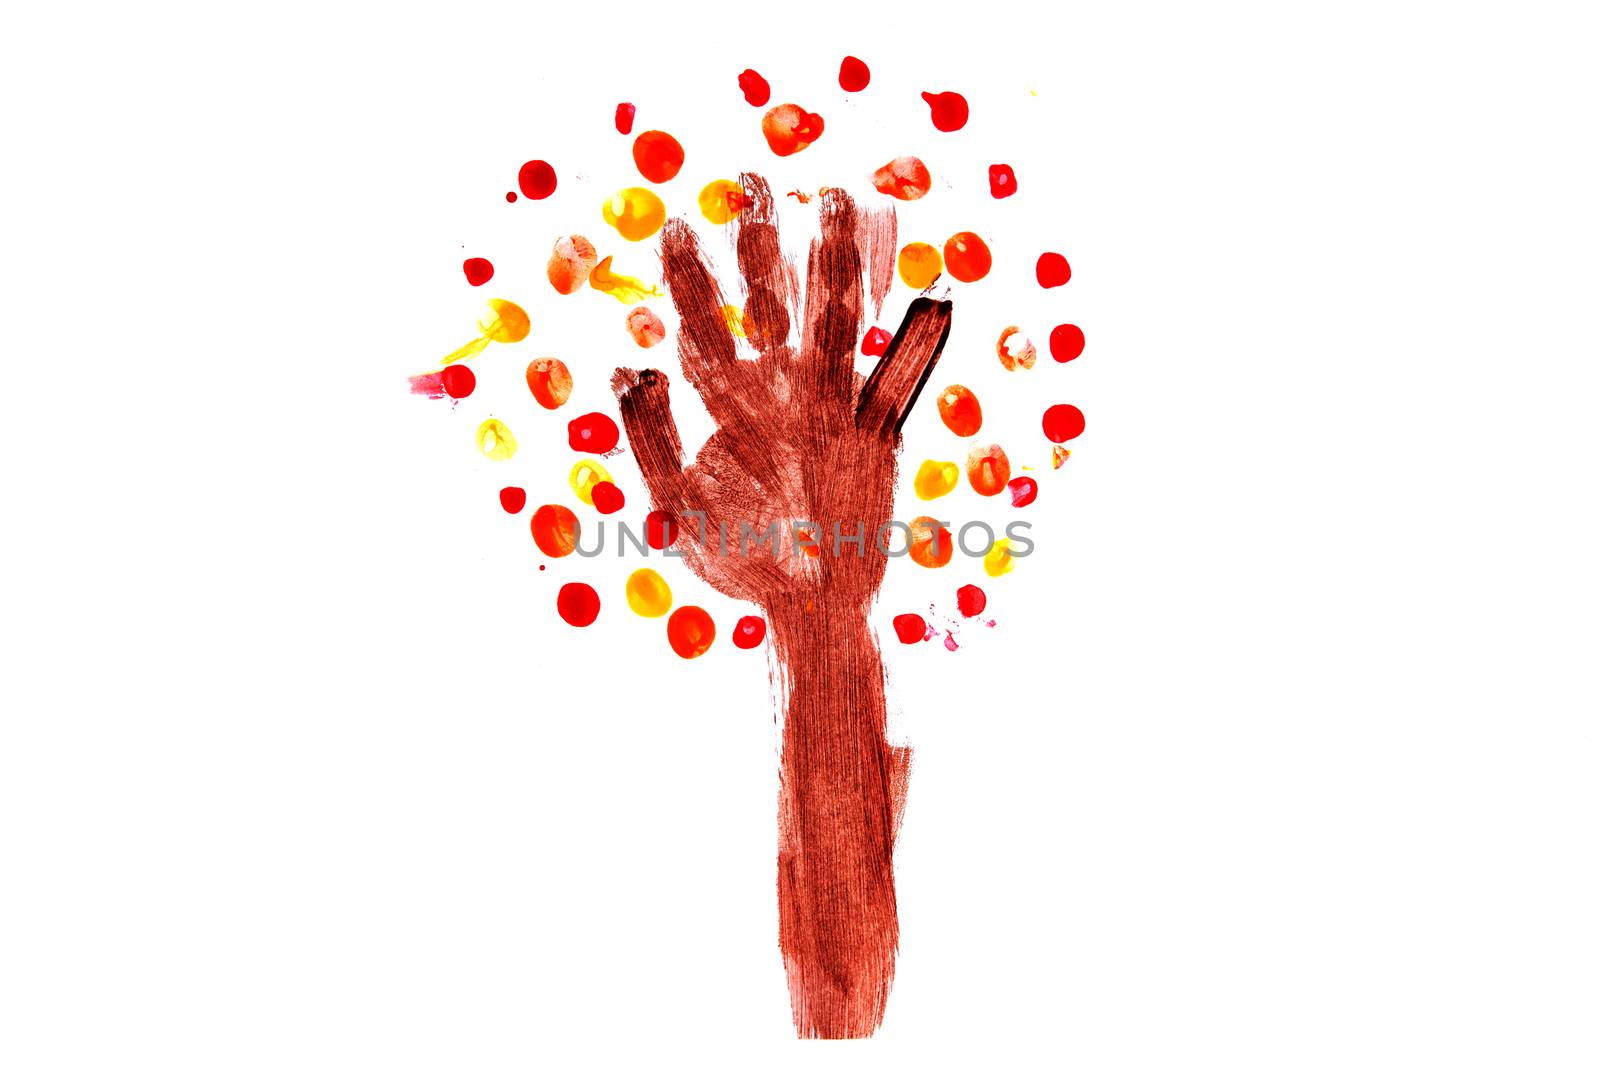 Child artwork, hand printed tree on plain background.